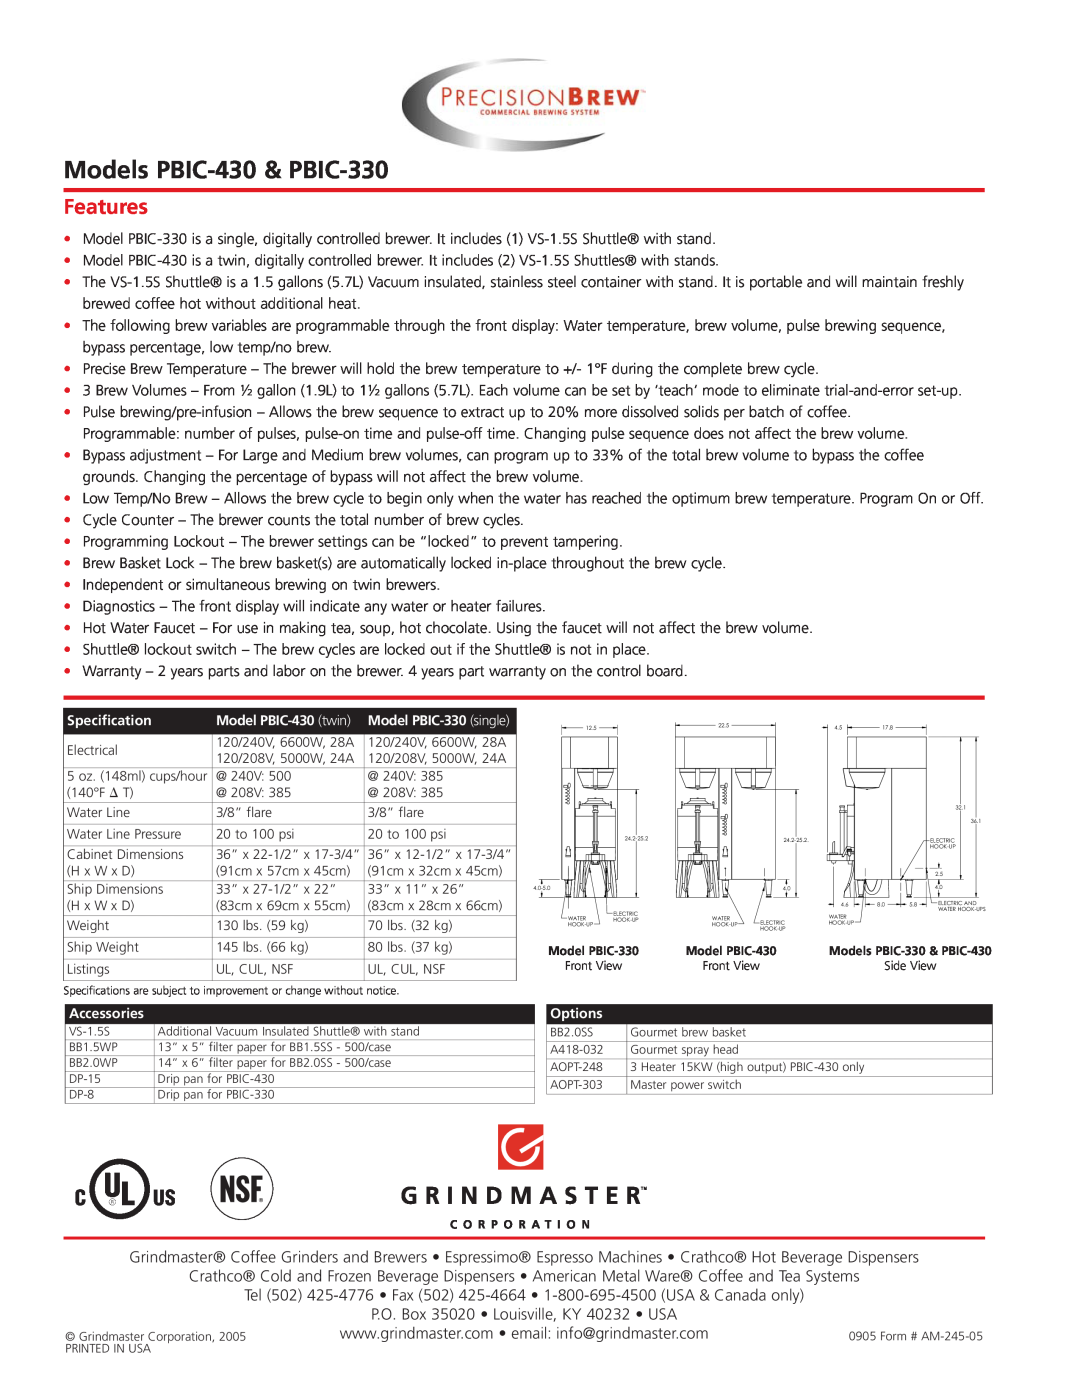 Grindmaster manual Models PBIC-430& PBIC-330, Features 